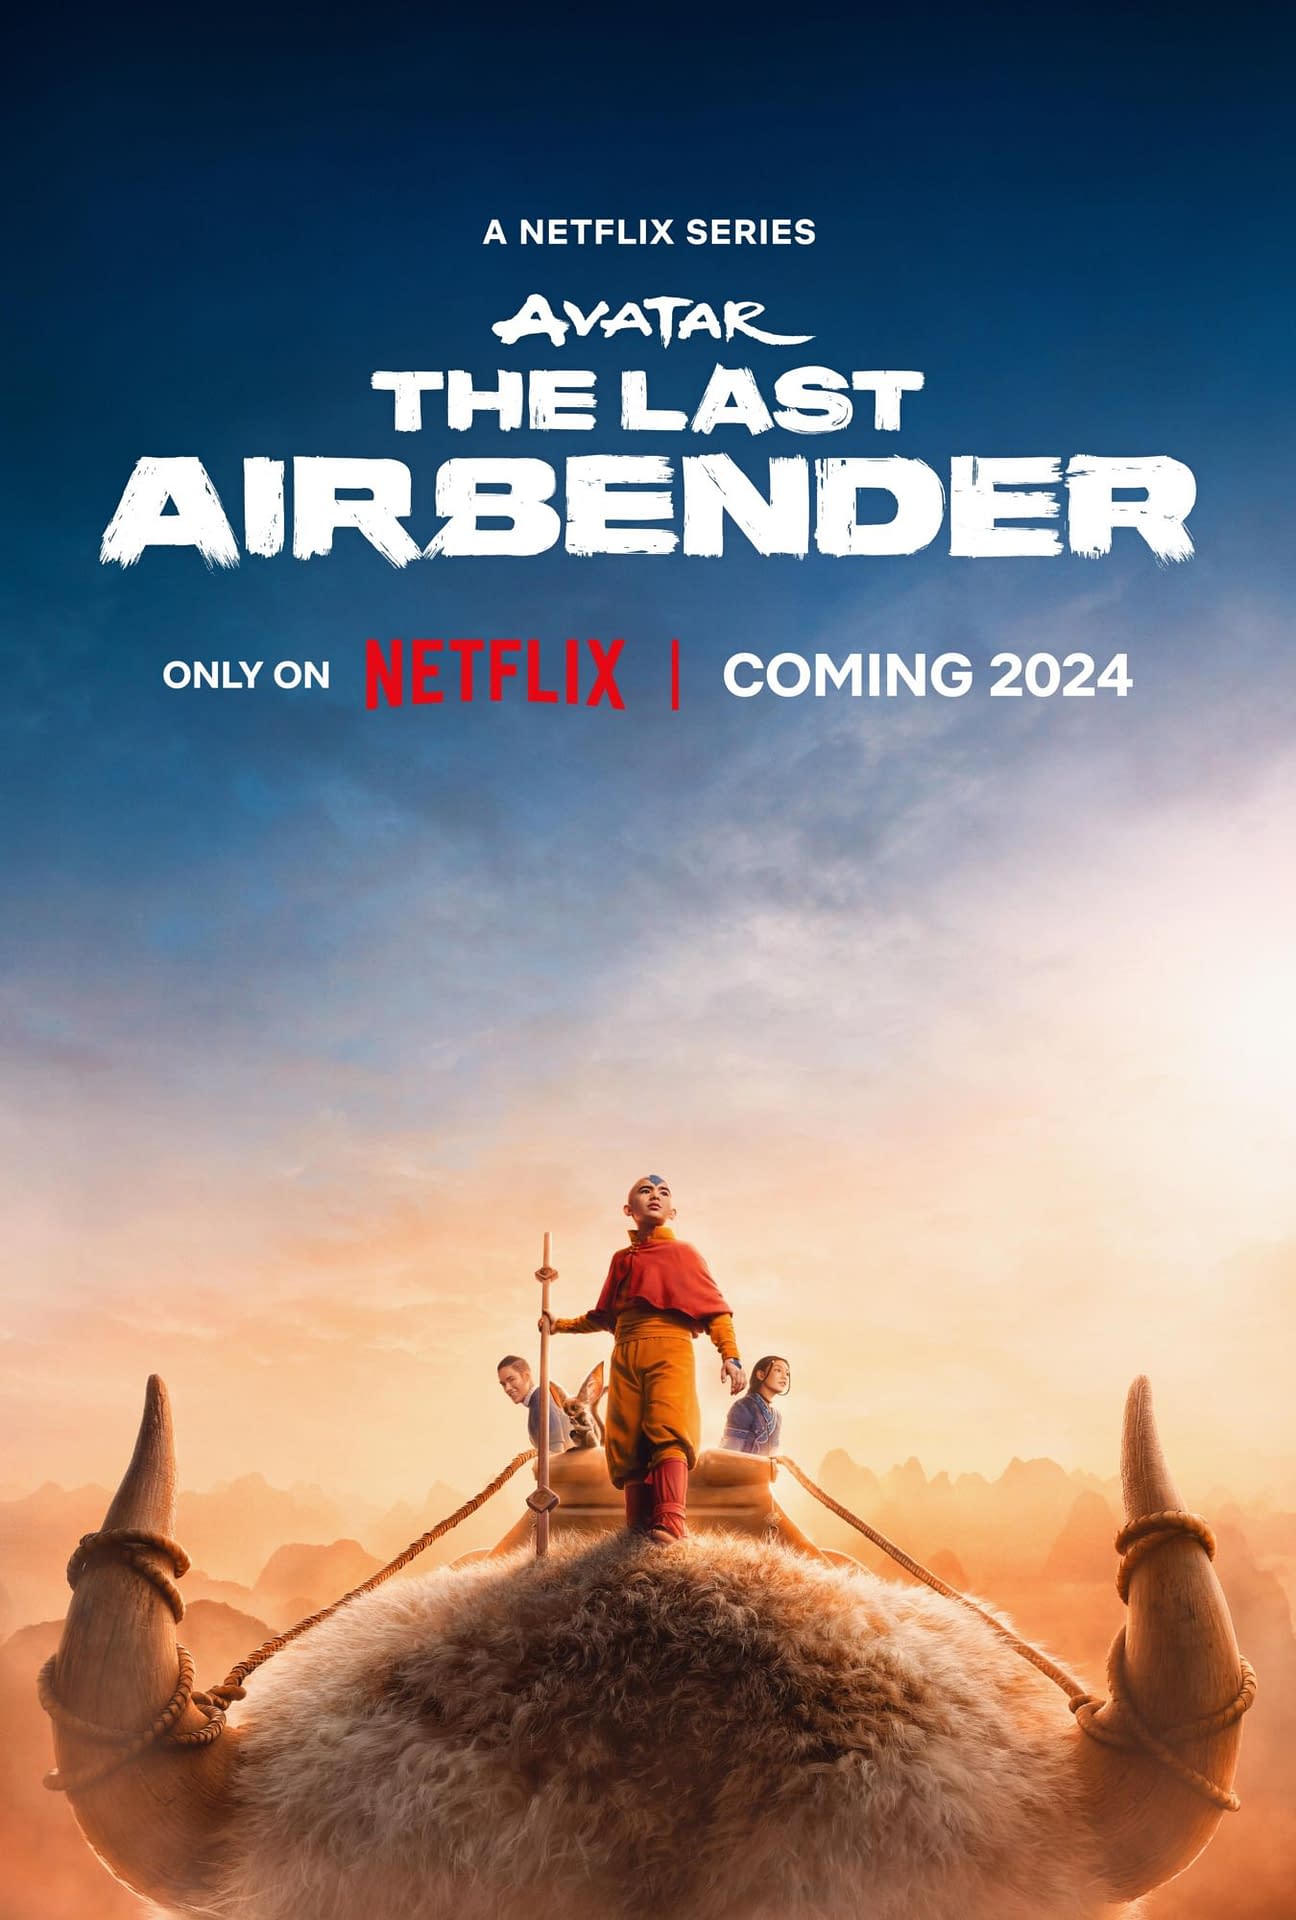 Avatar The Last Airbender New Image Spotlights Aang, Katara & Sokka